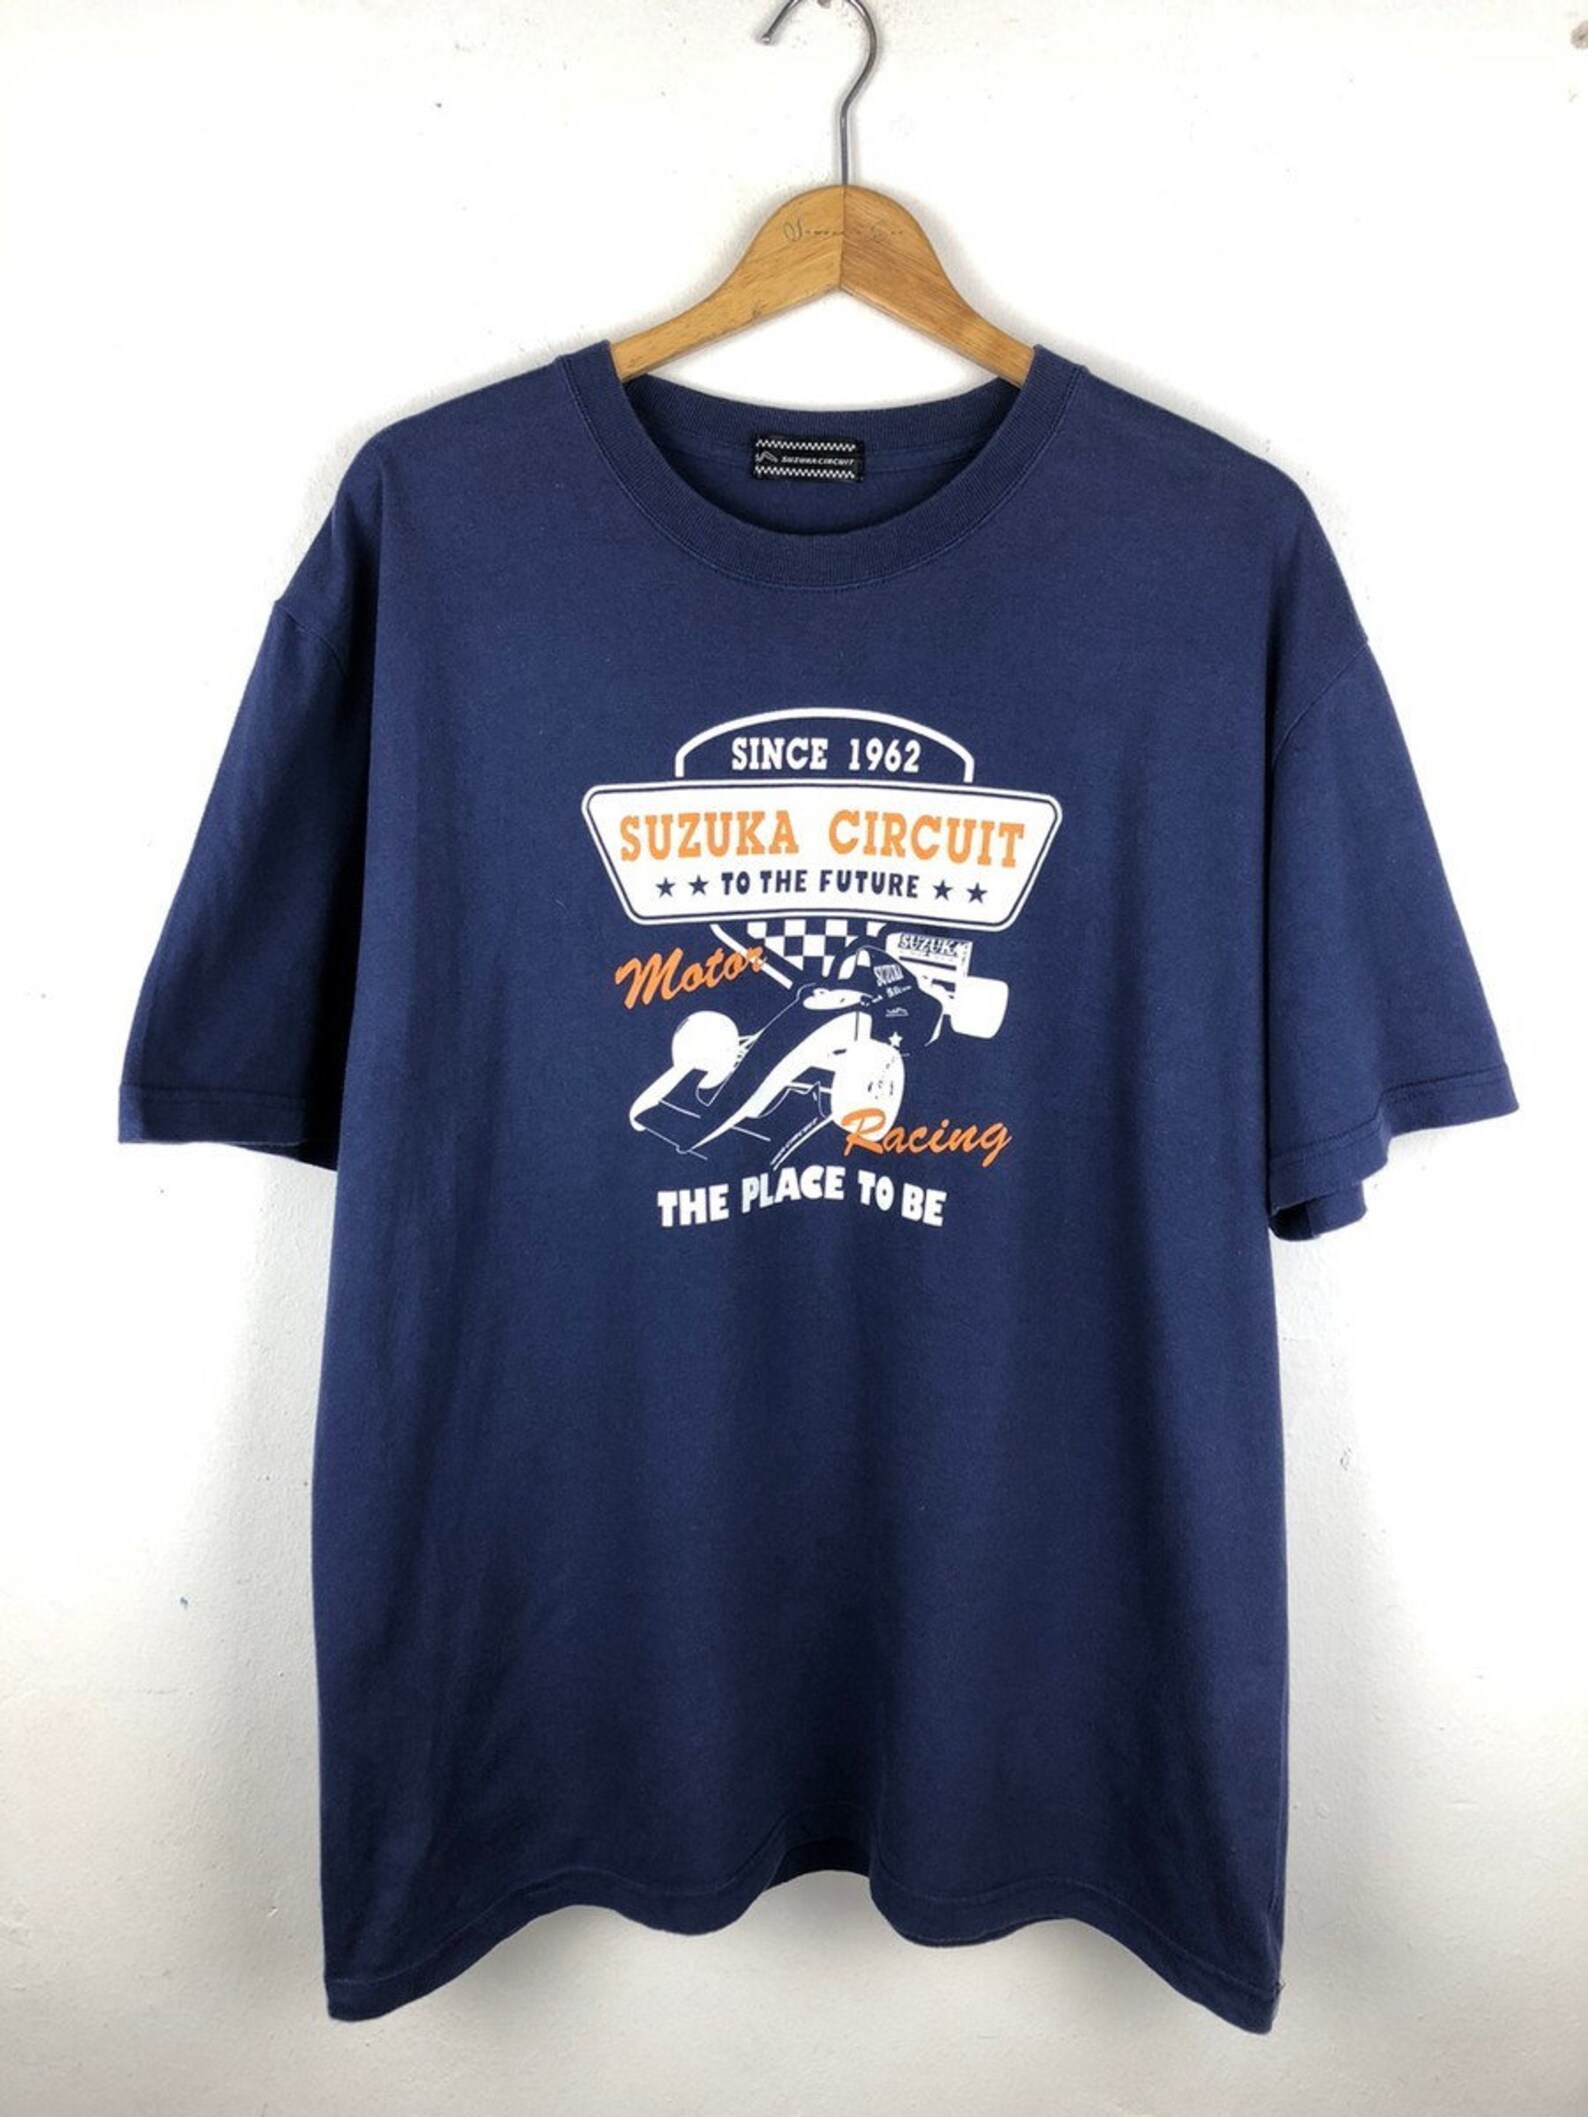 Vintage Suzuka Circuit T-Shirt | Etsy